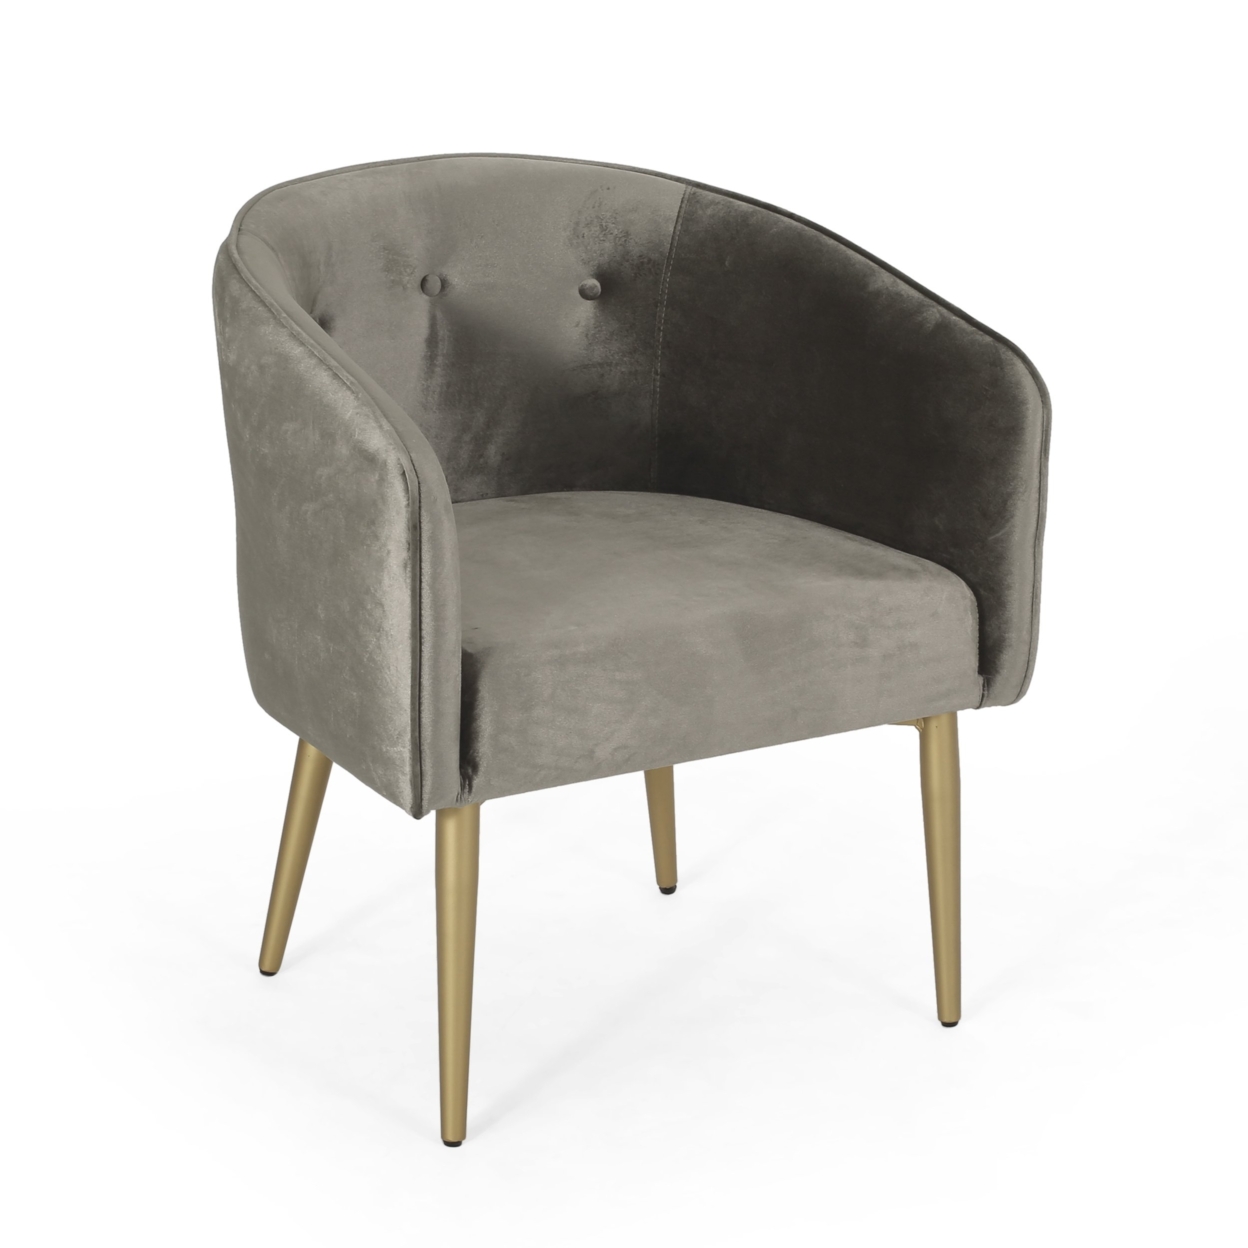 Malinta Modern Glam Tufted Velvet Dining Chair - Gold/grey